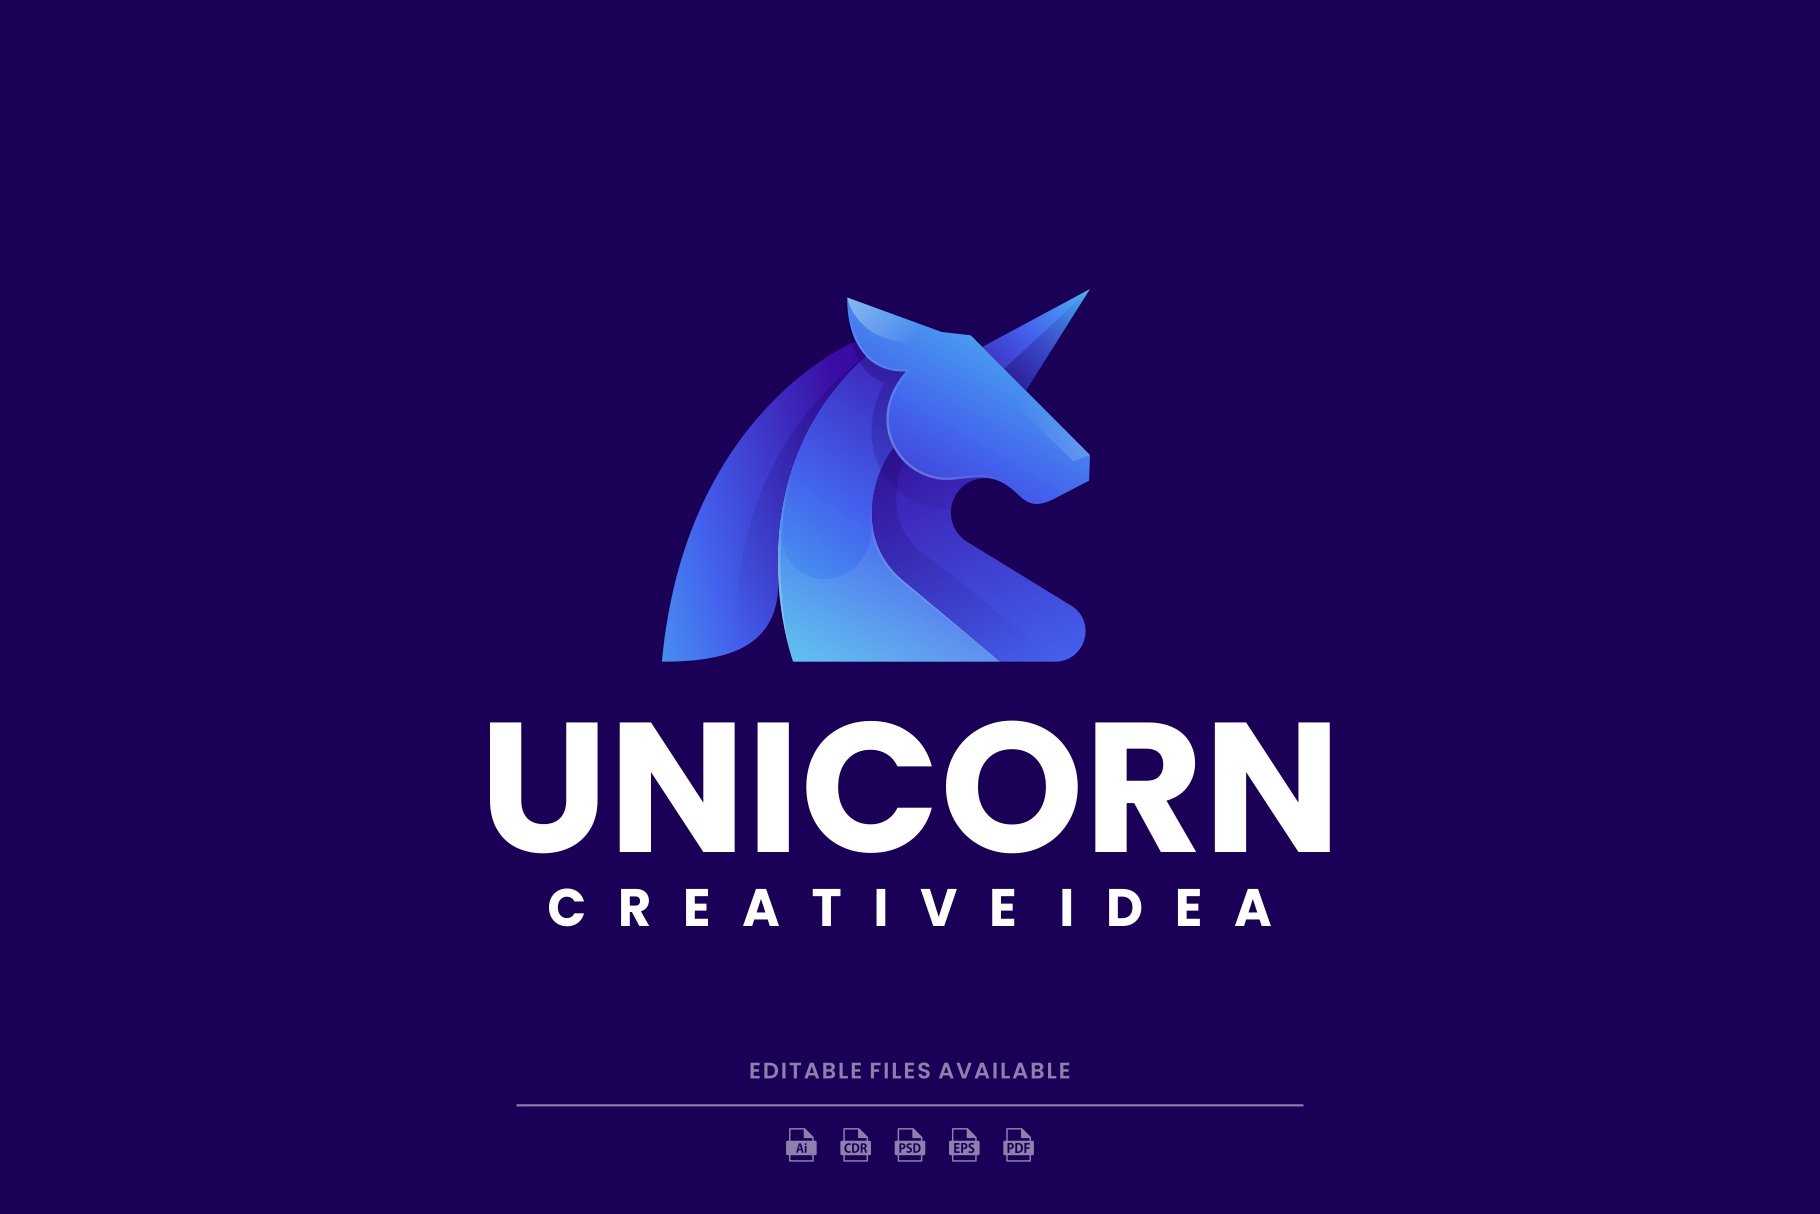 Unicorn Colorful Logo cover image.